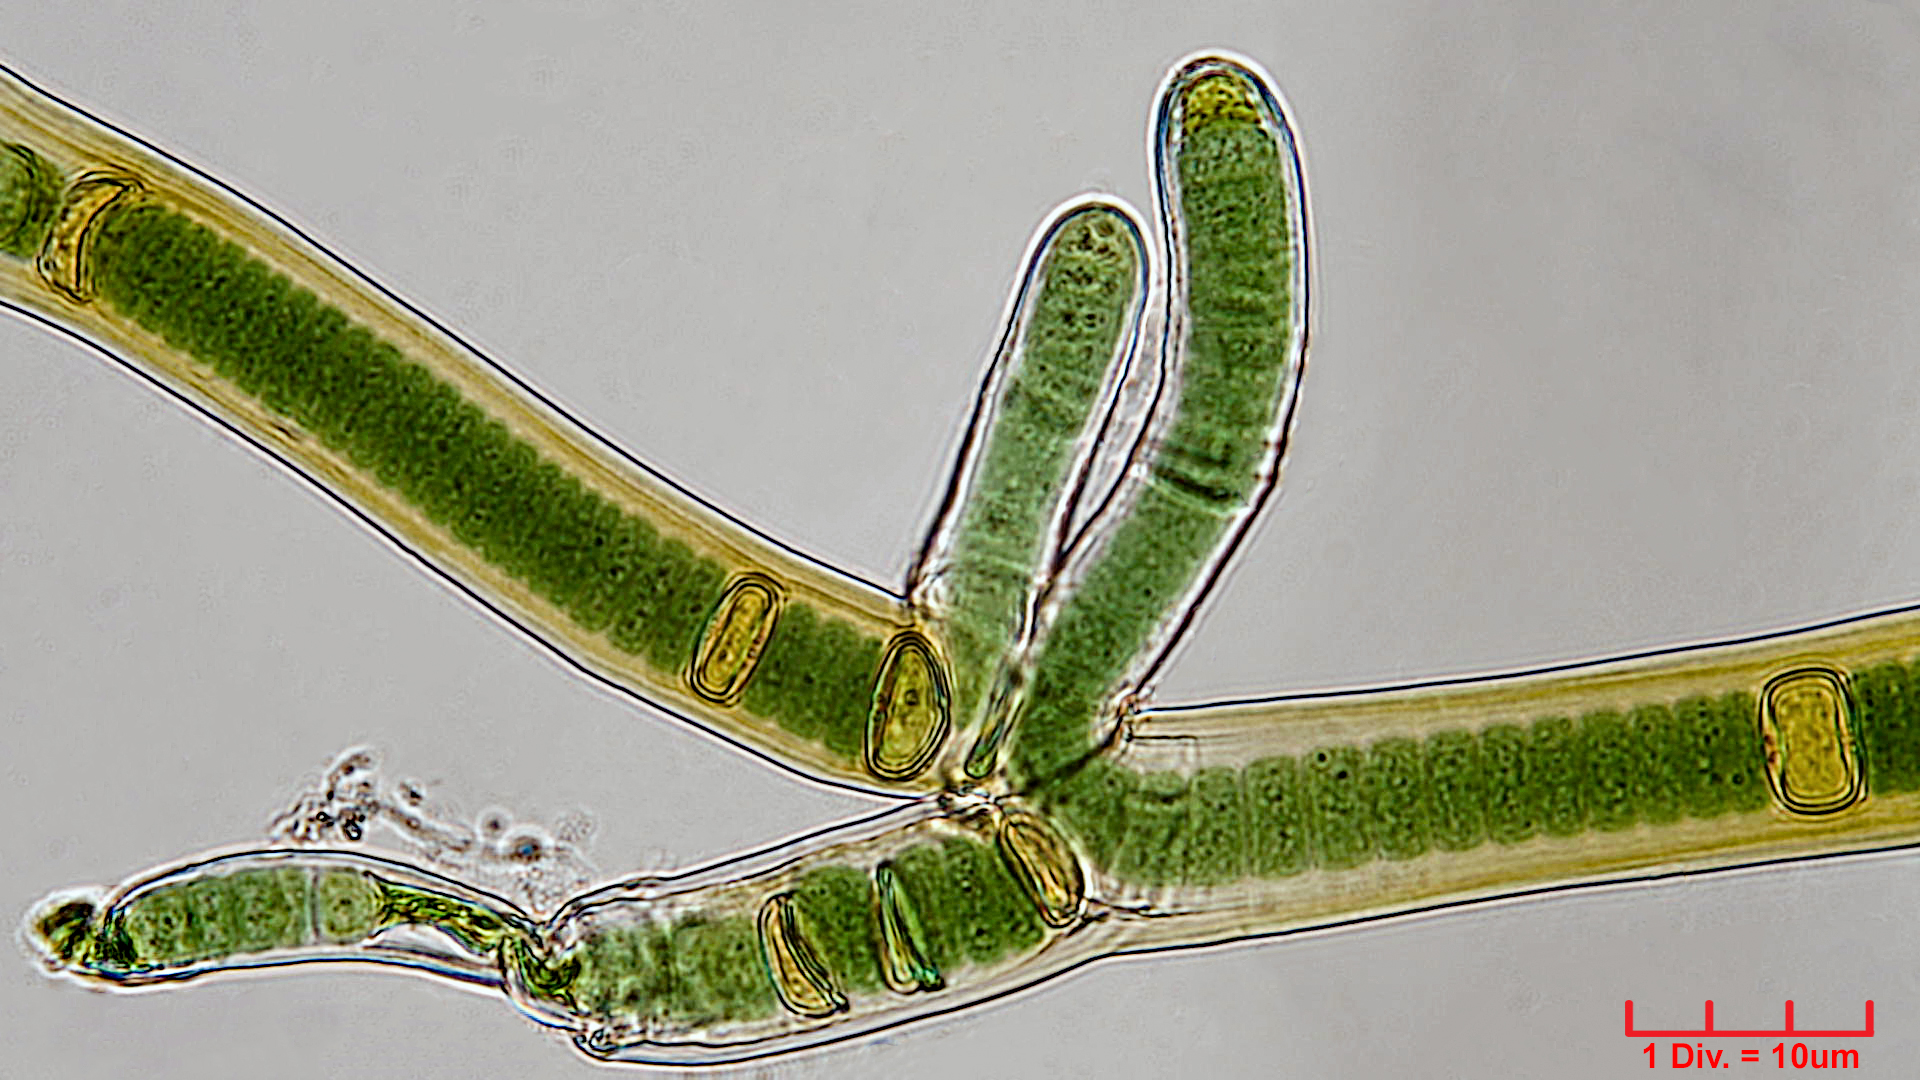 ././Cyanobacteria/Nostocales/Scytonemataceae/Scytonema/crispum/scytonema-crispum-350.jpg